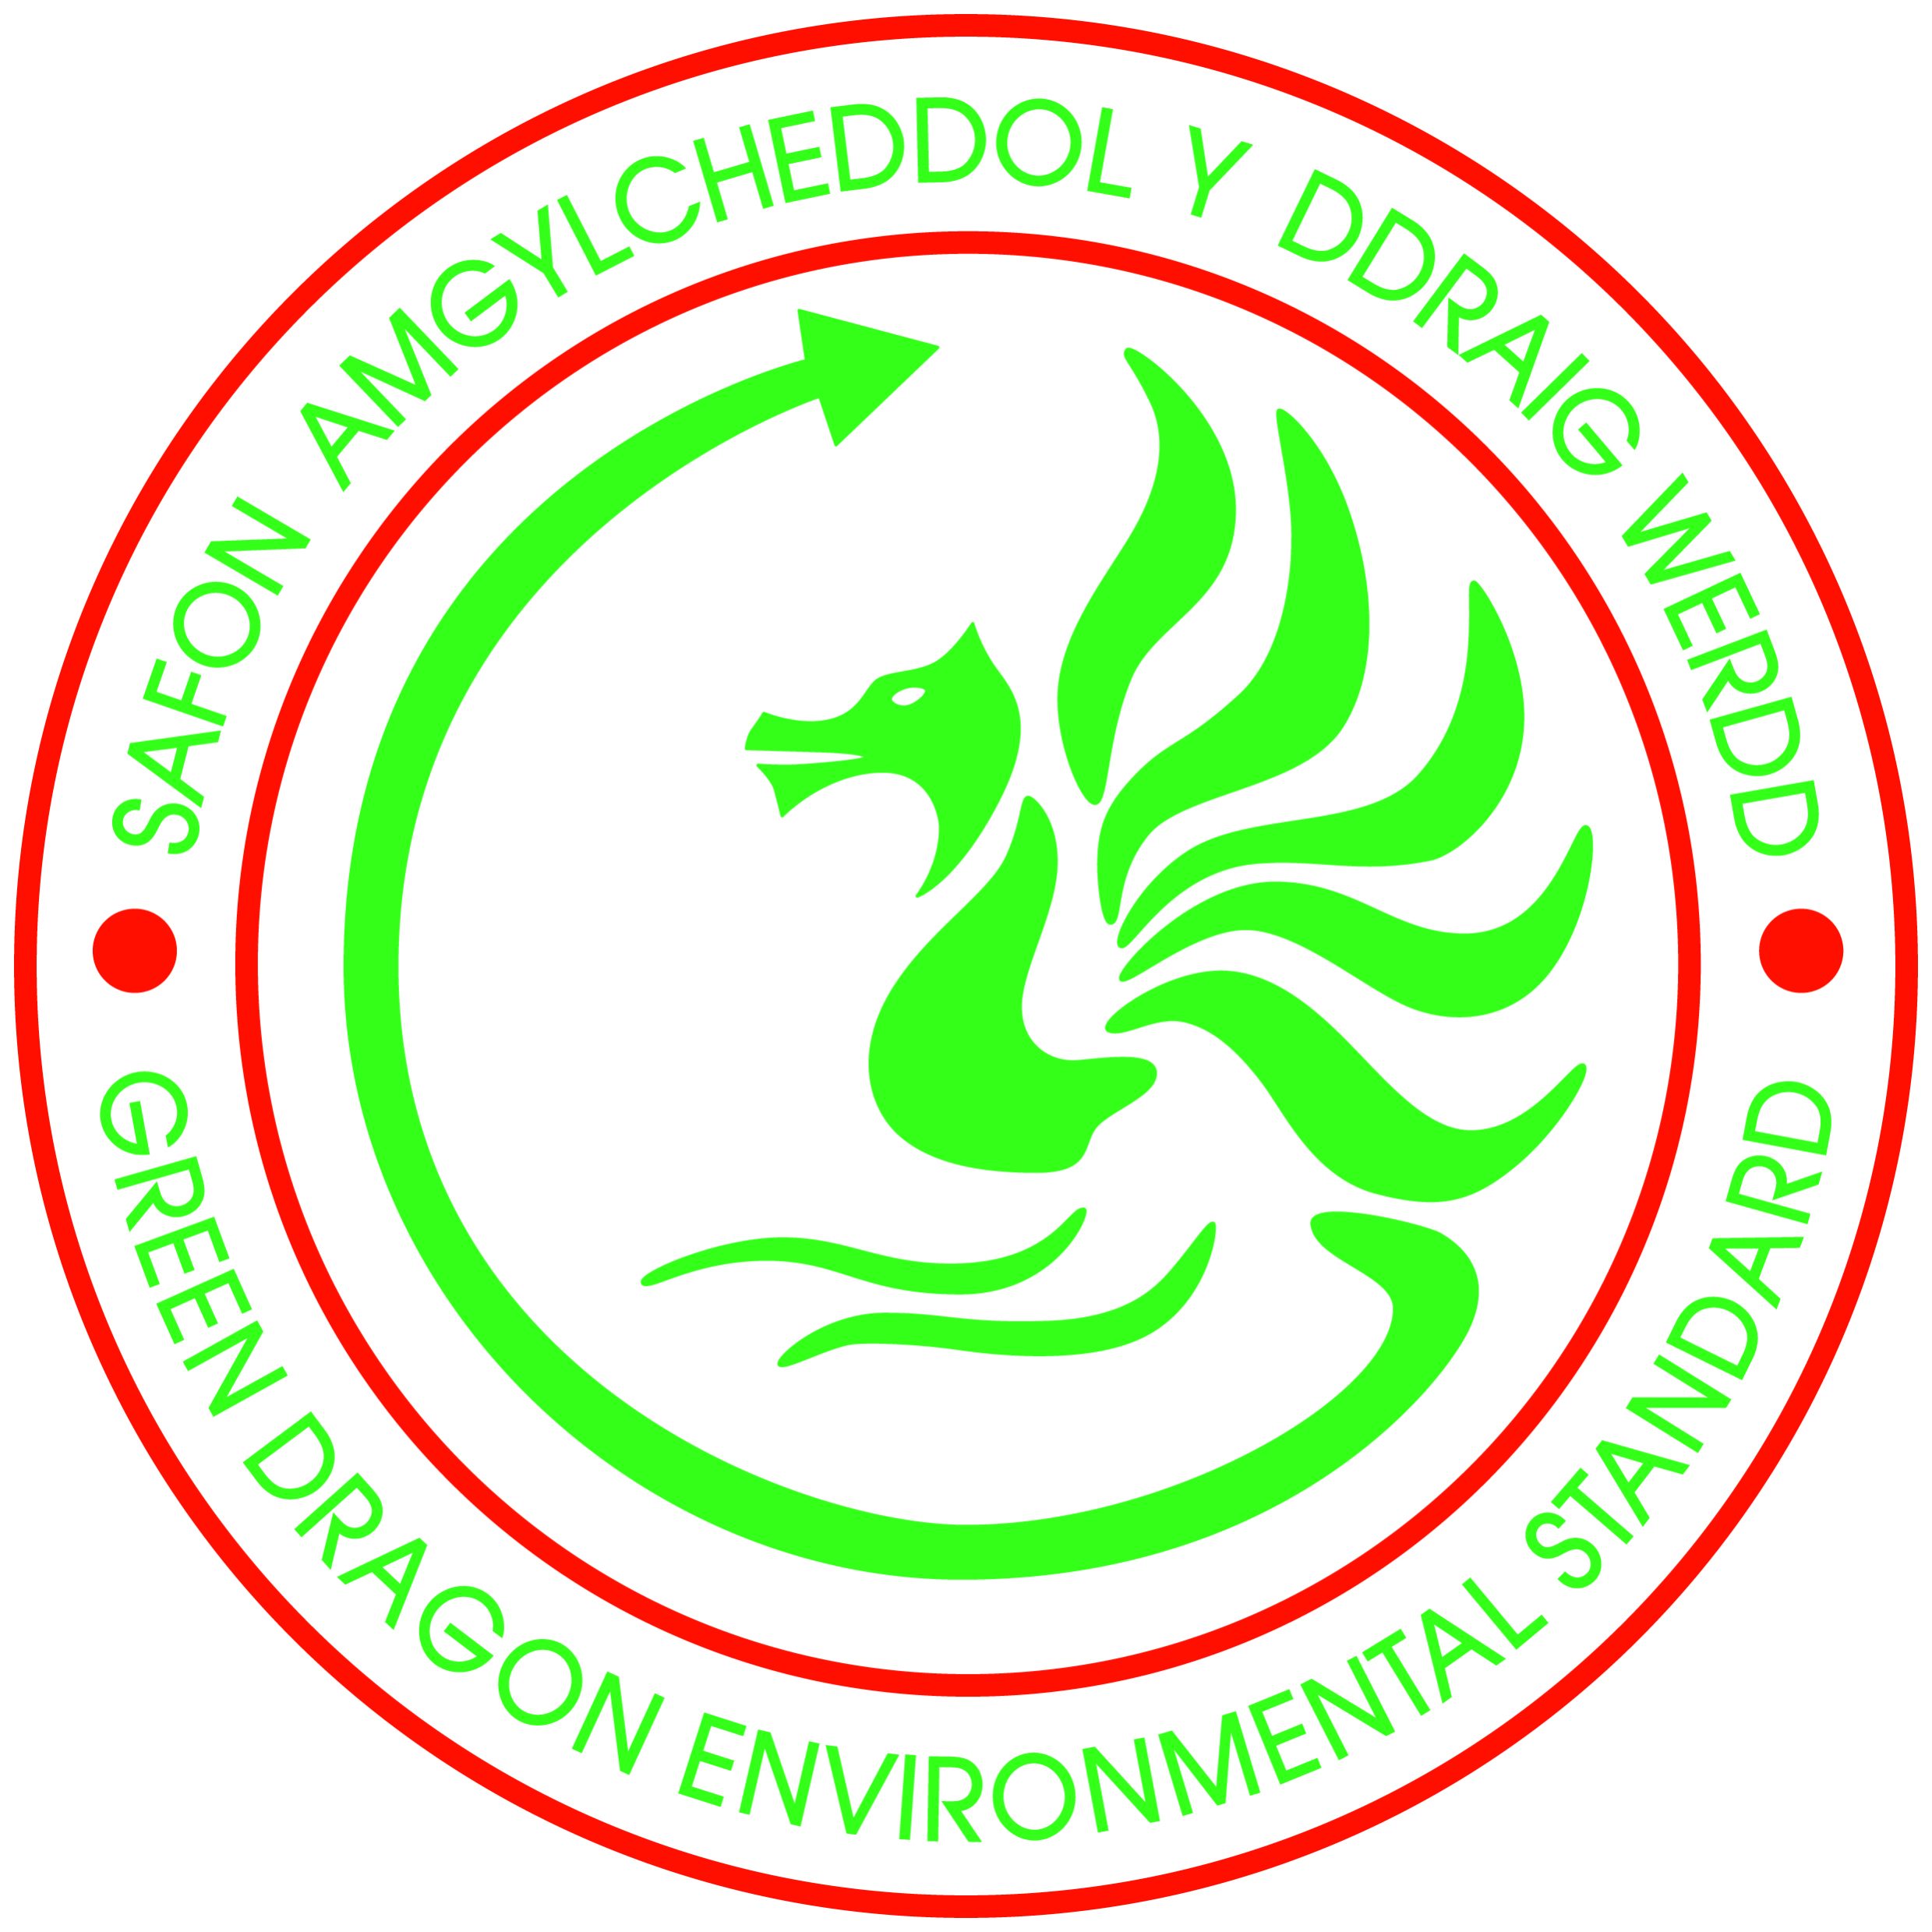 Green Dragon Logo